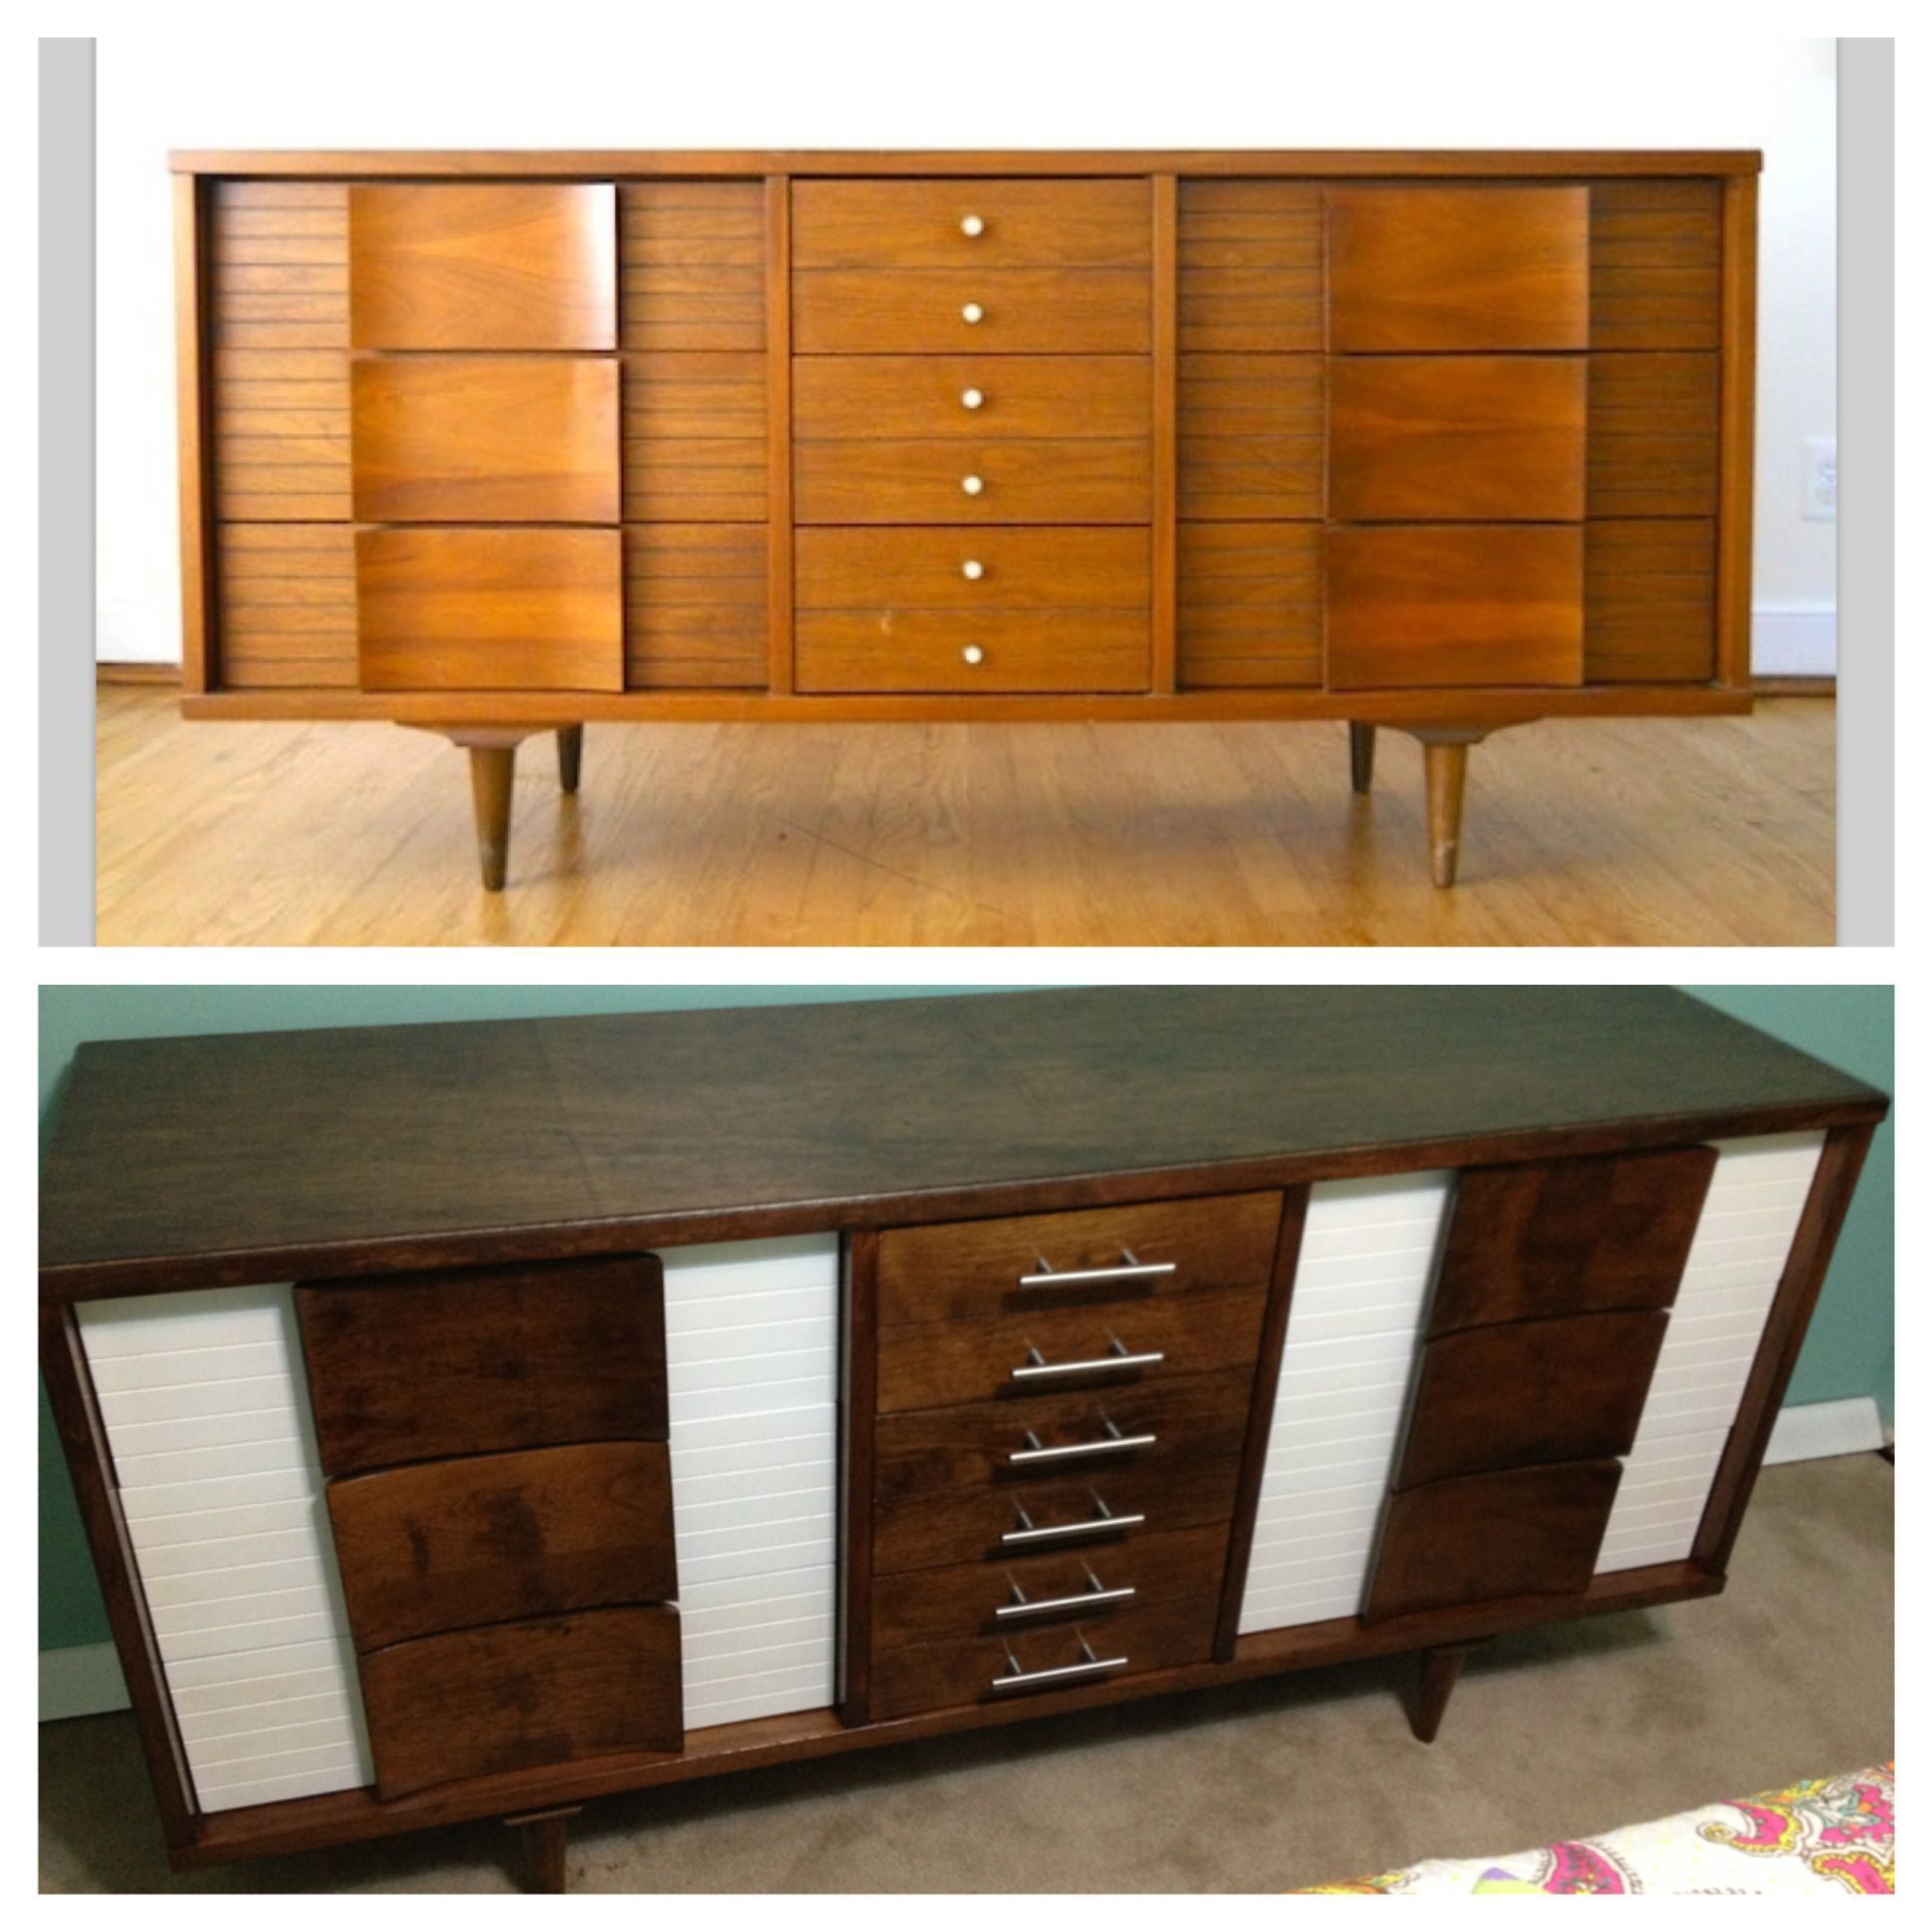 Before And After Johnson Carper Furniture | Diy | Furniture In Filkins Sideboards (Gallery 17 of 20)